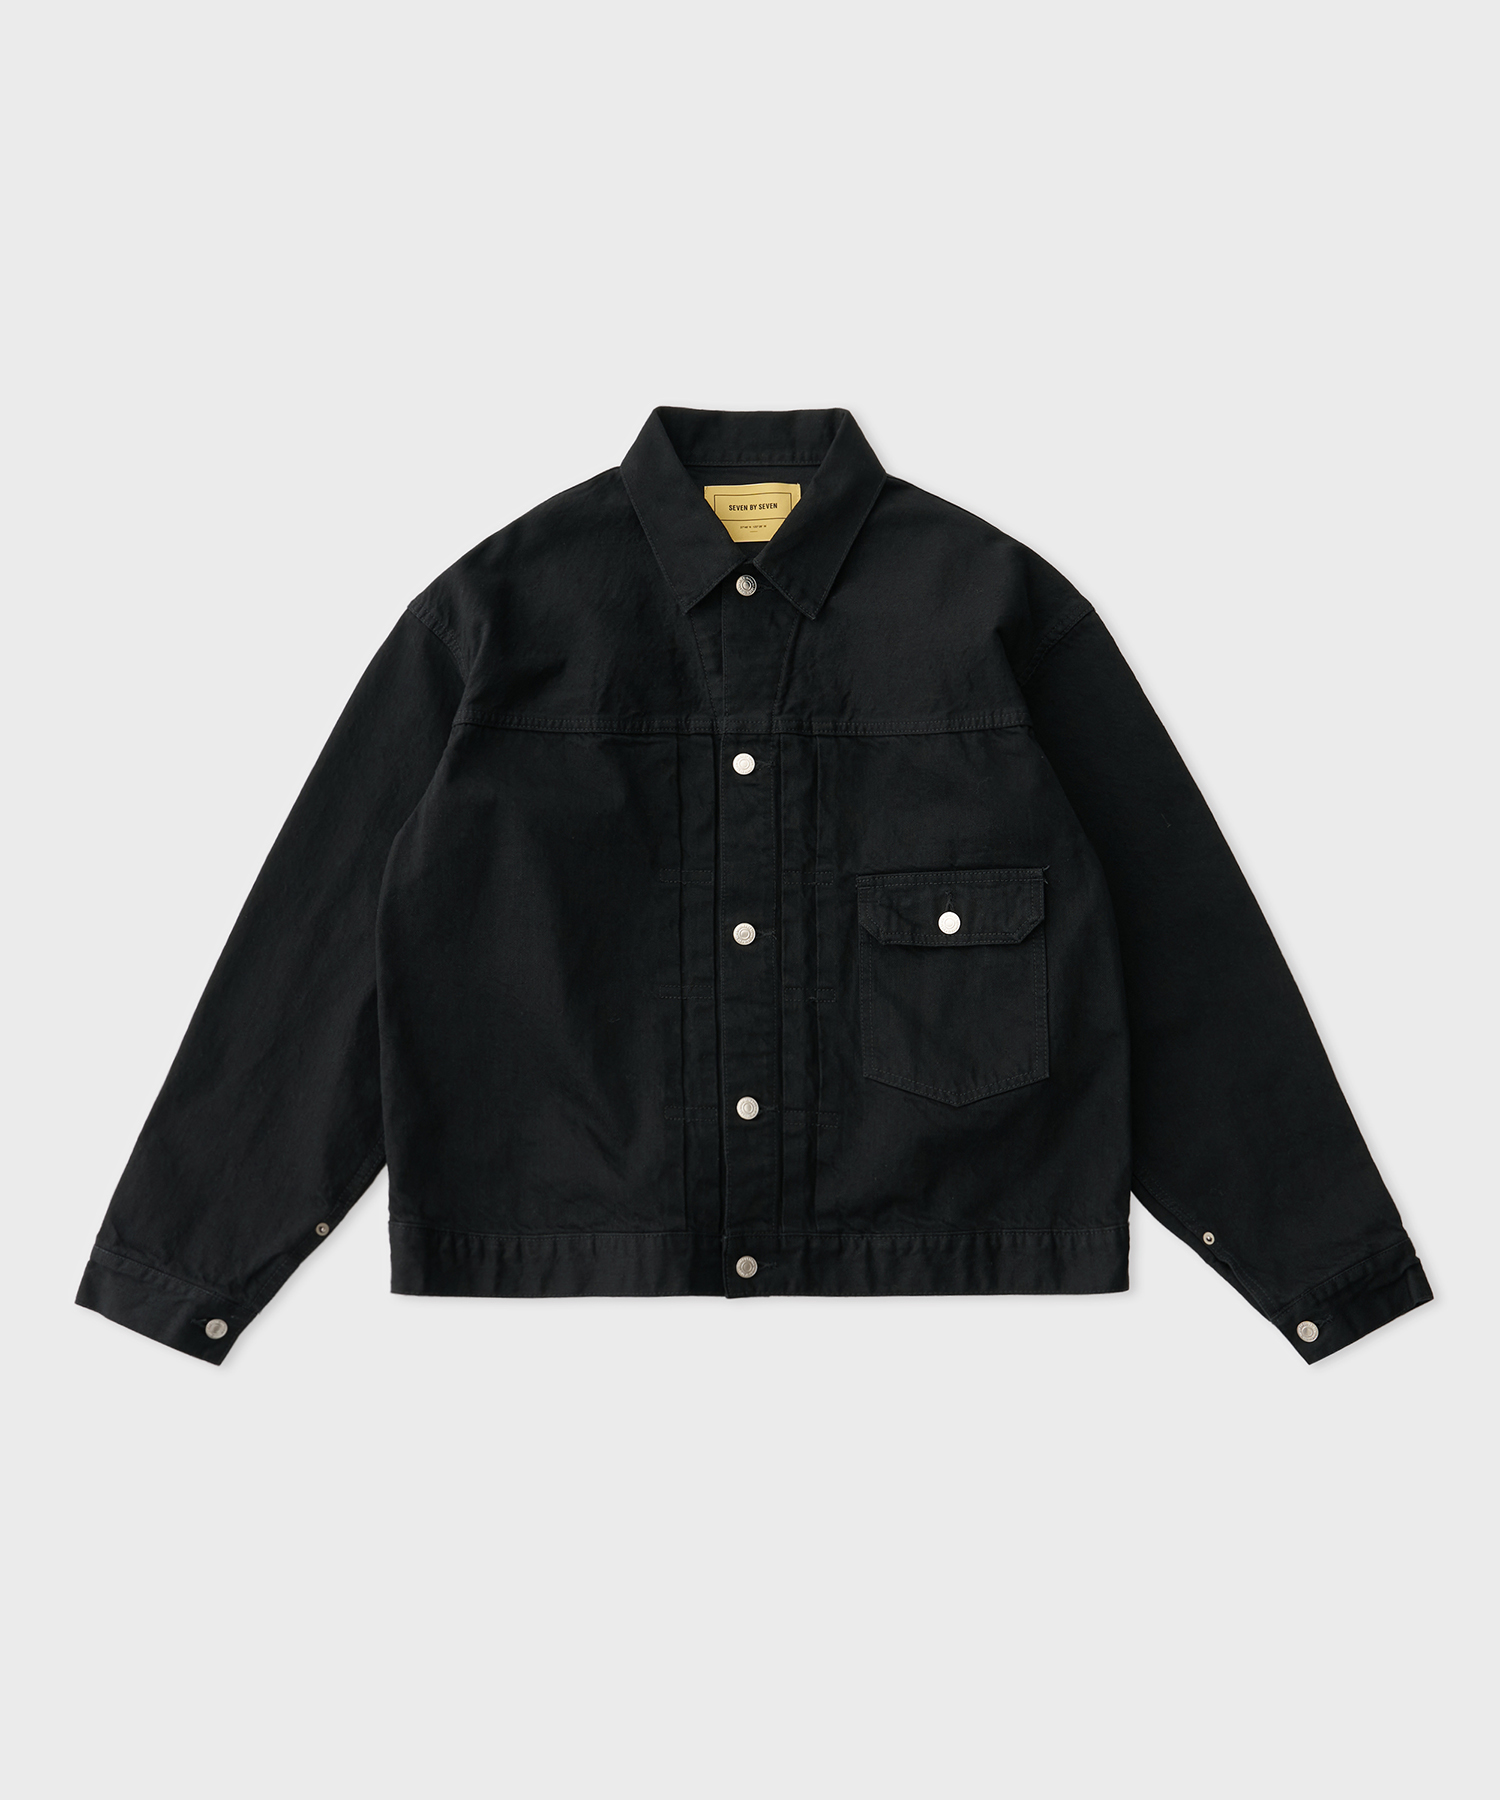 1st Type Black Denim Jacket (Black)